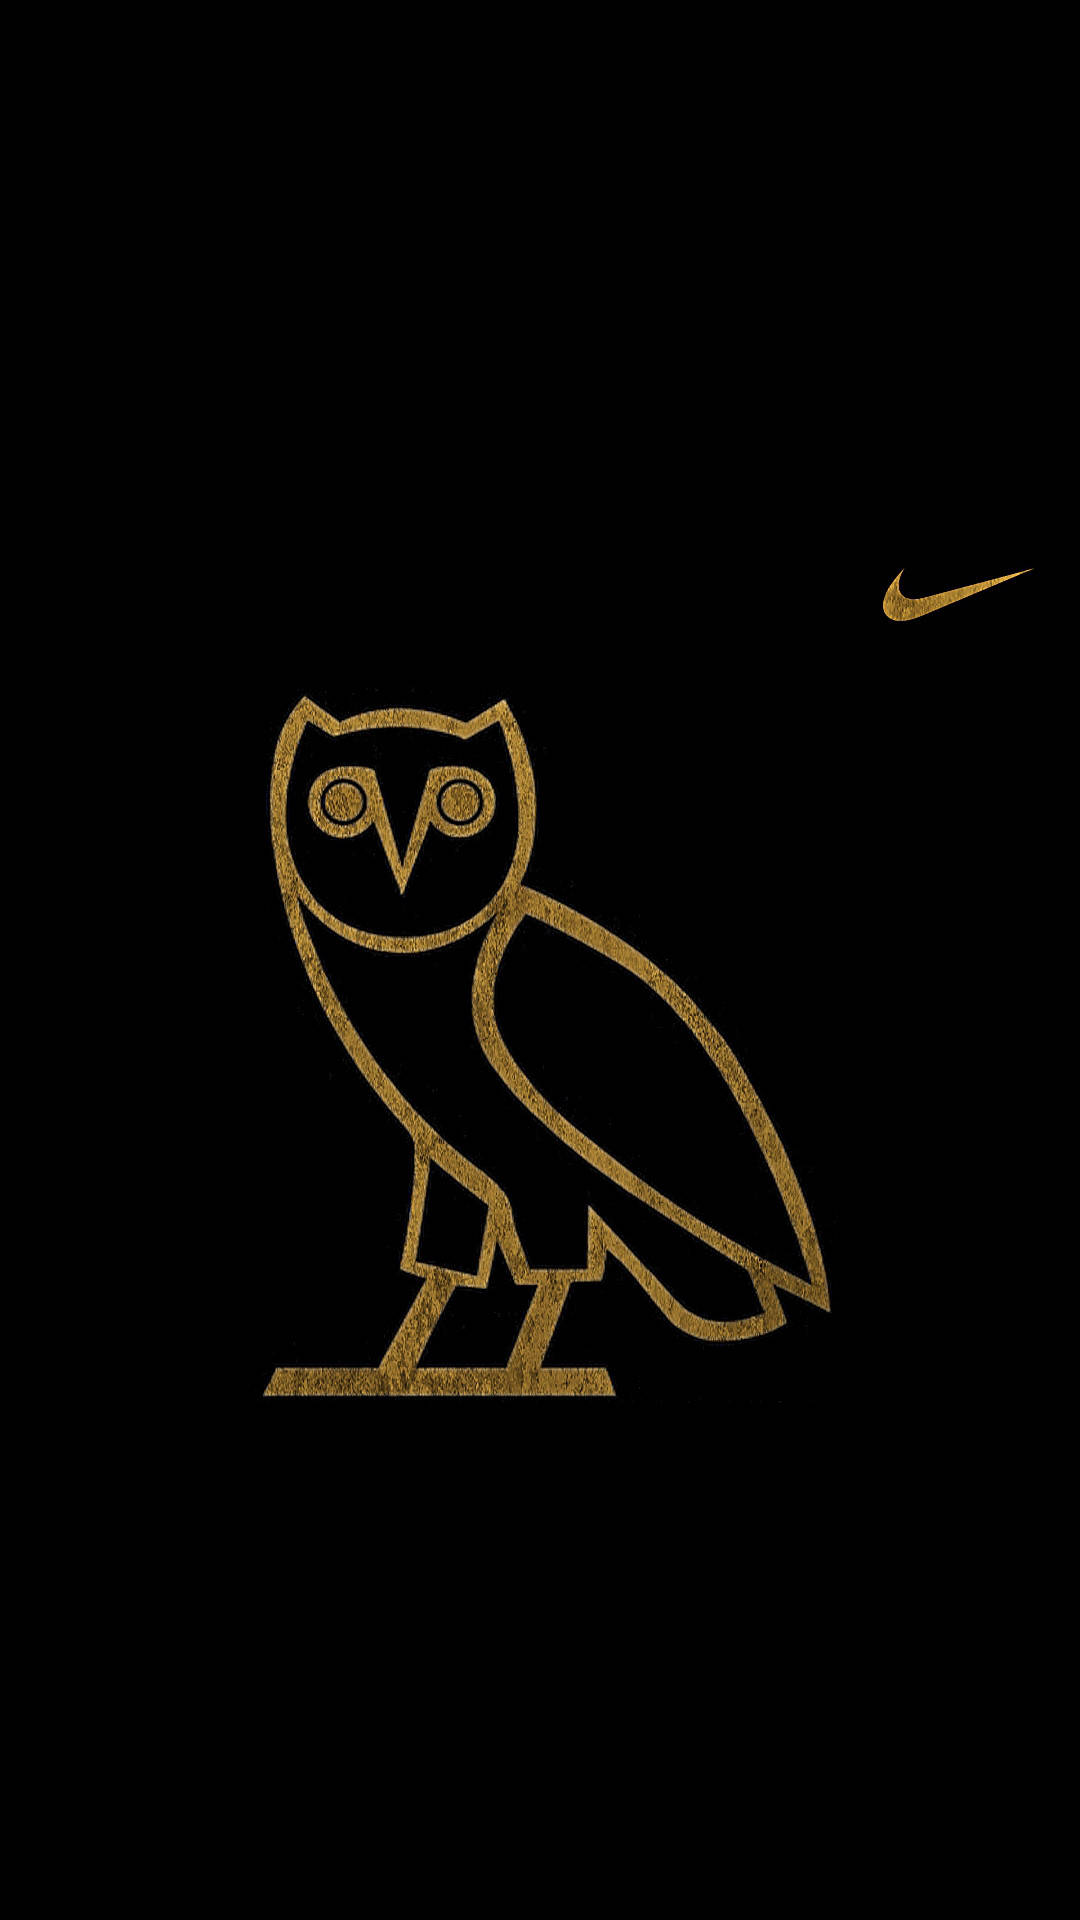 Swoosh Logo With Owl